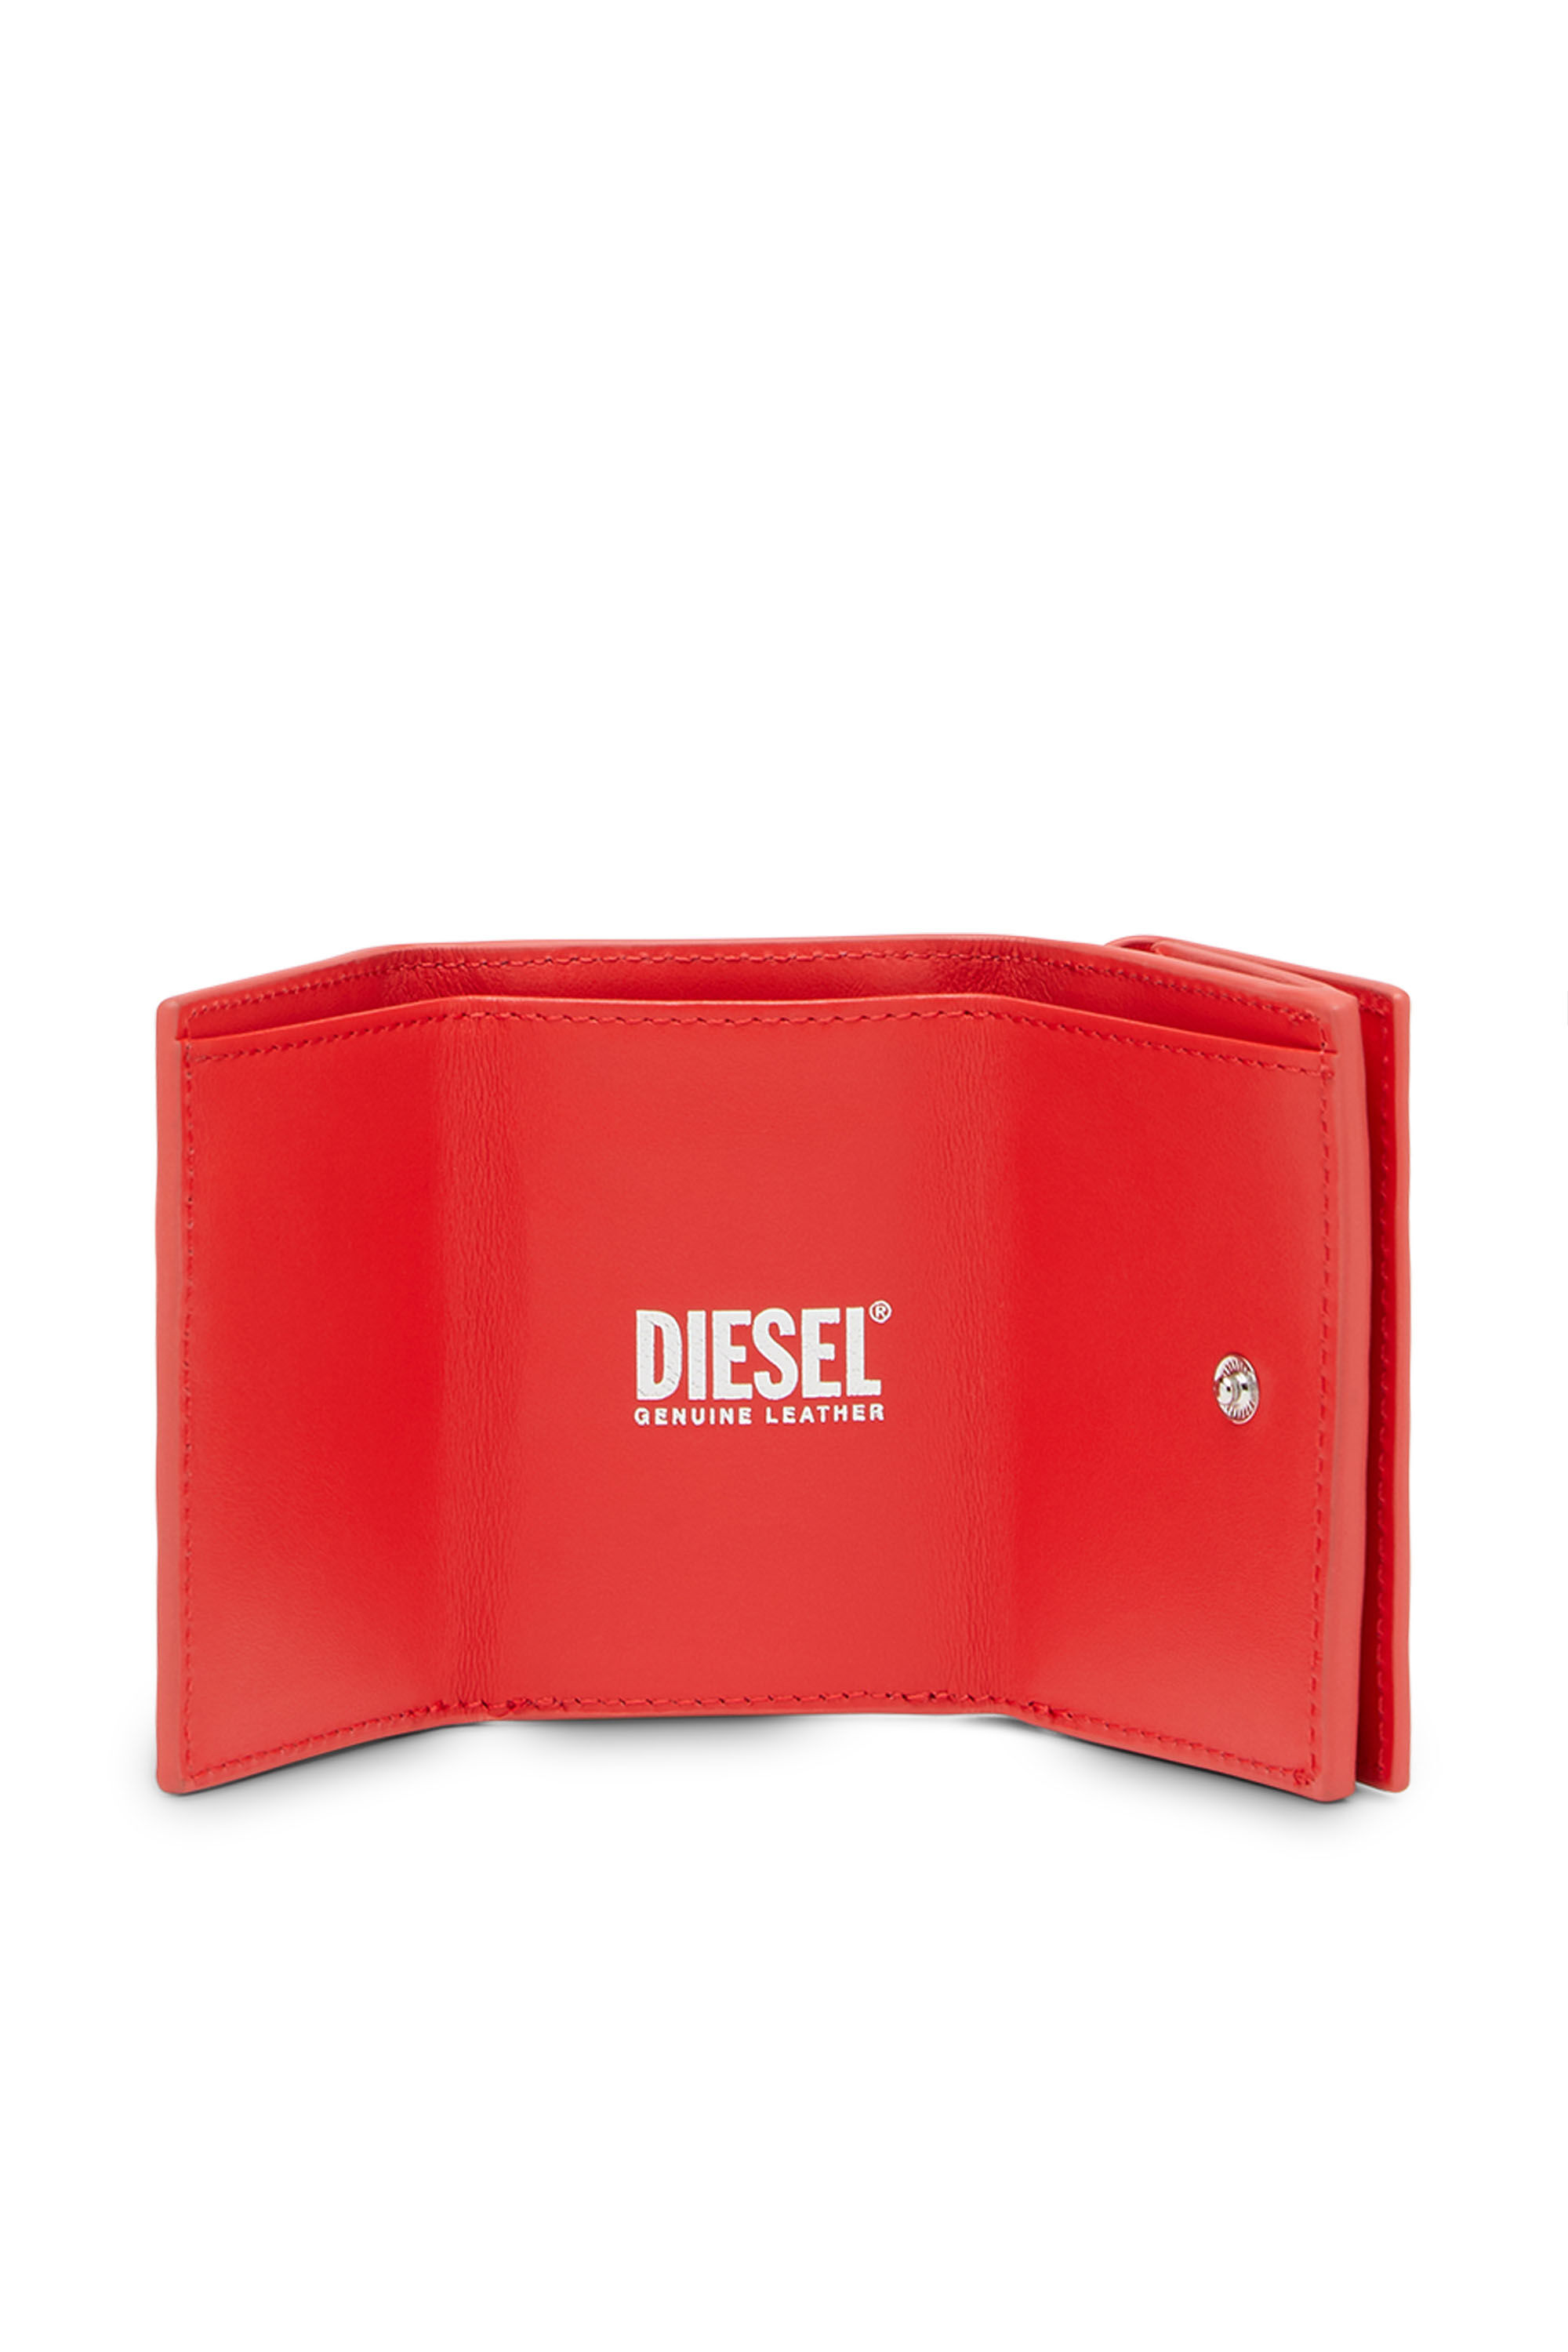 Diesel - LORETTINA, Red - Image 3